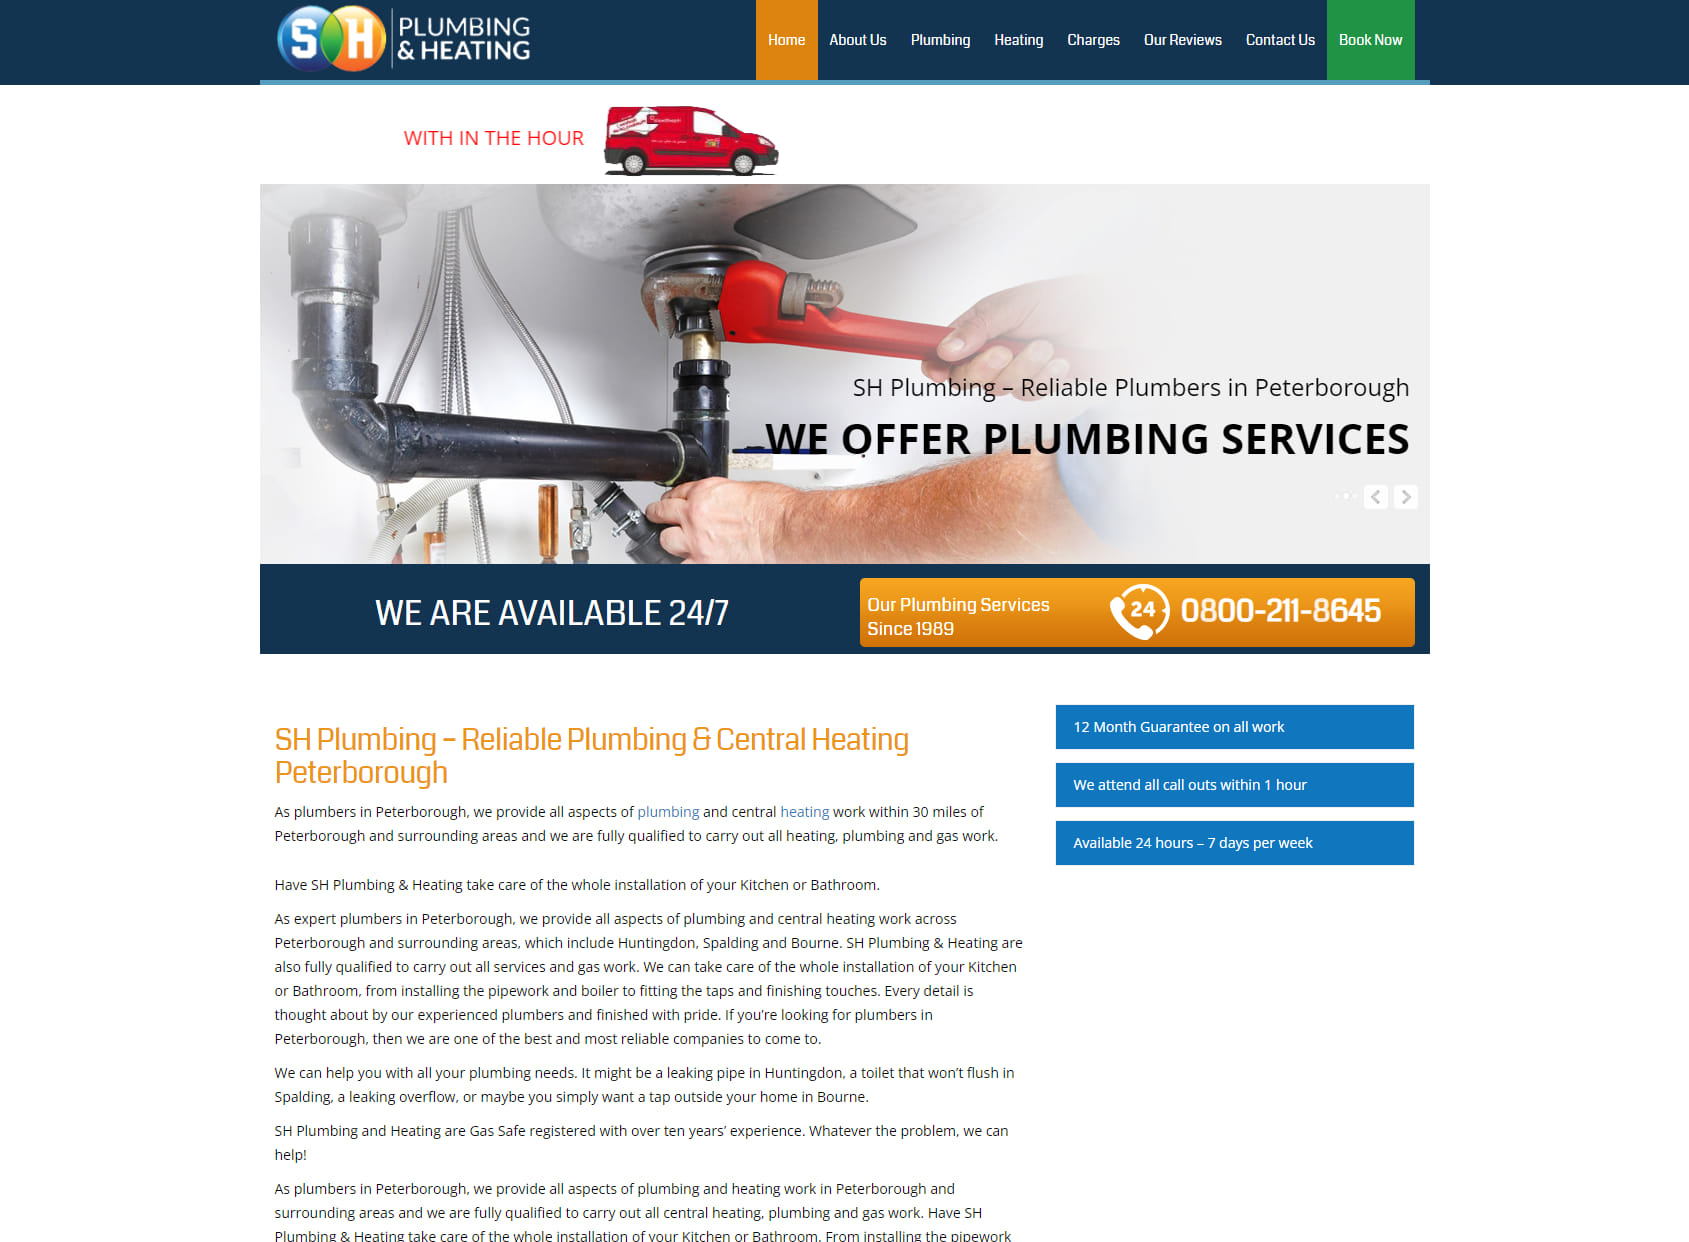 S.H Plumbing & Heating